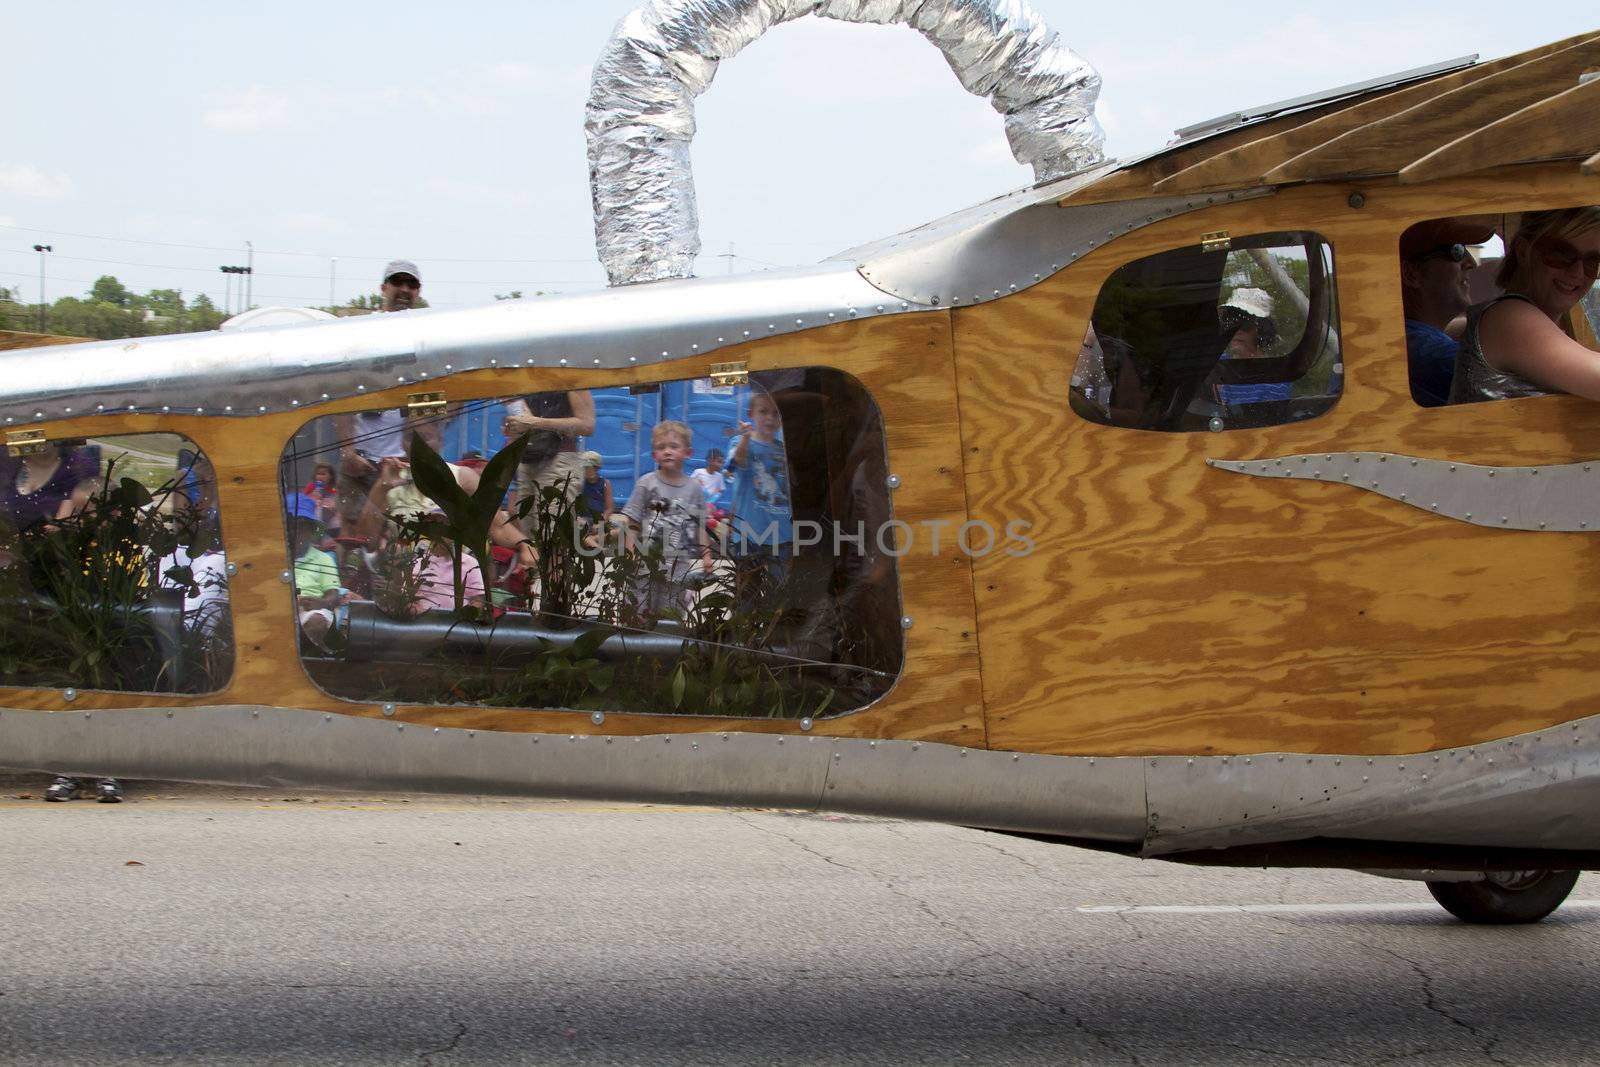 2011 Houston Art Car Parade by rrcolejrphoto